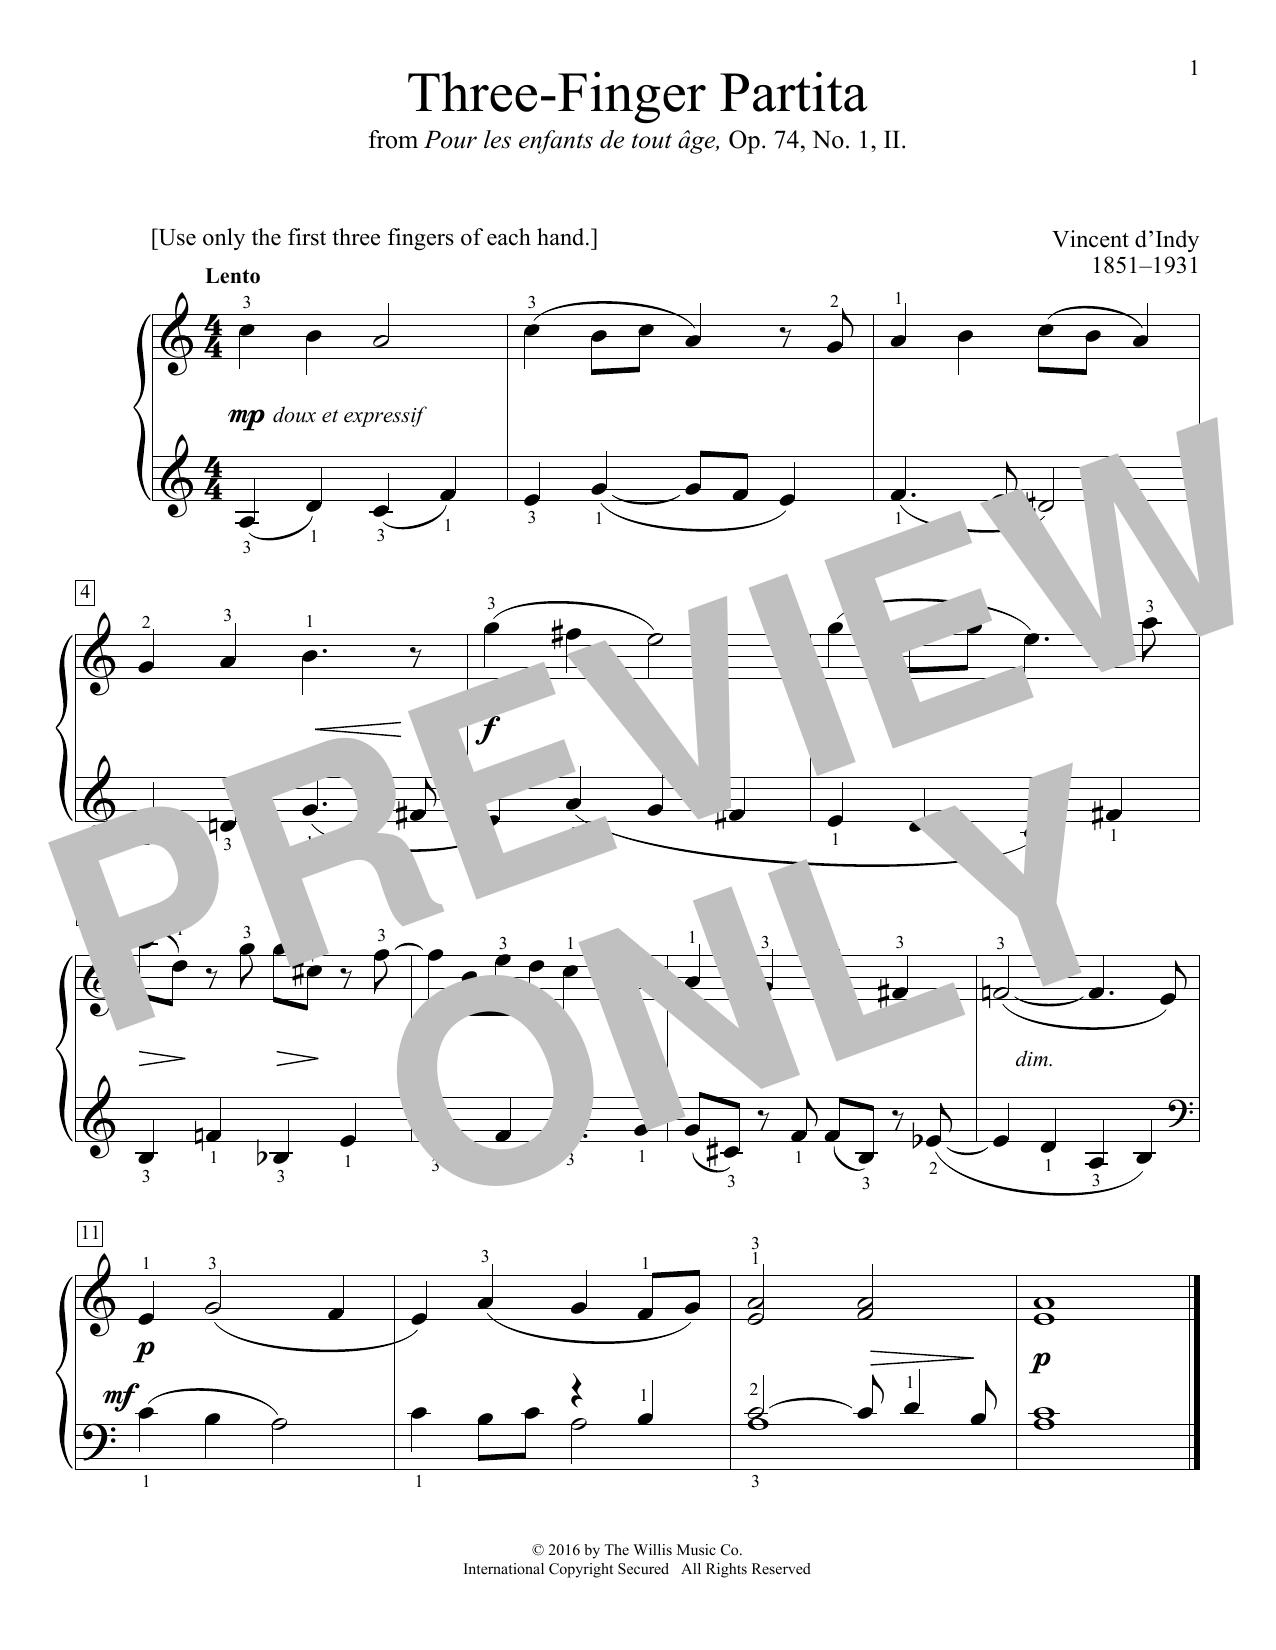 Download Vincent d'Indy Three-Finger Partita Sheet Music